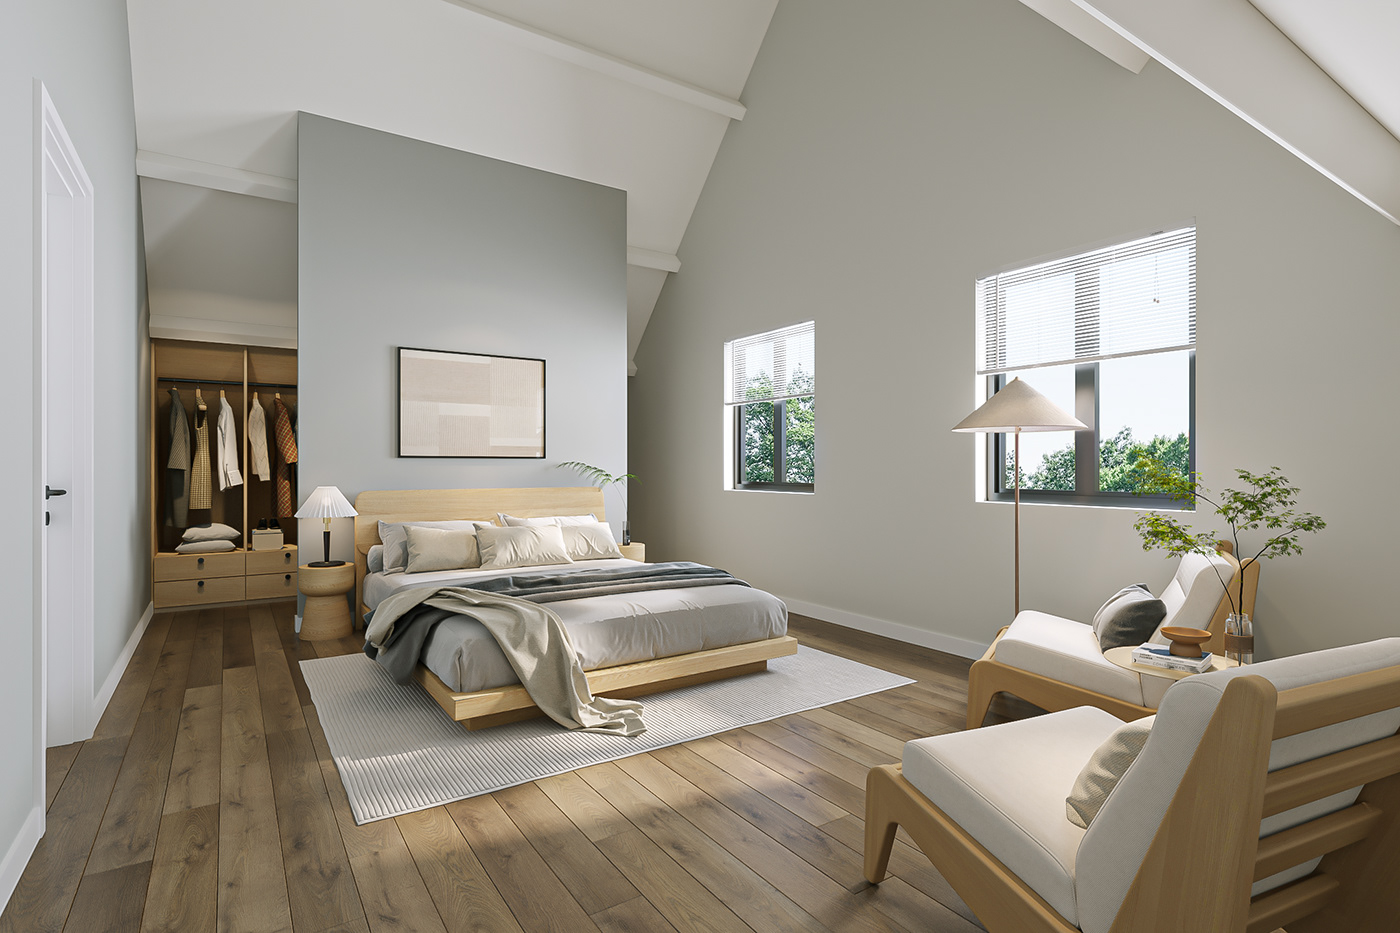 3ds max corona render  modern coffee shop 3d floor plan Scandinavian interior design  living room dining kitchen